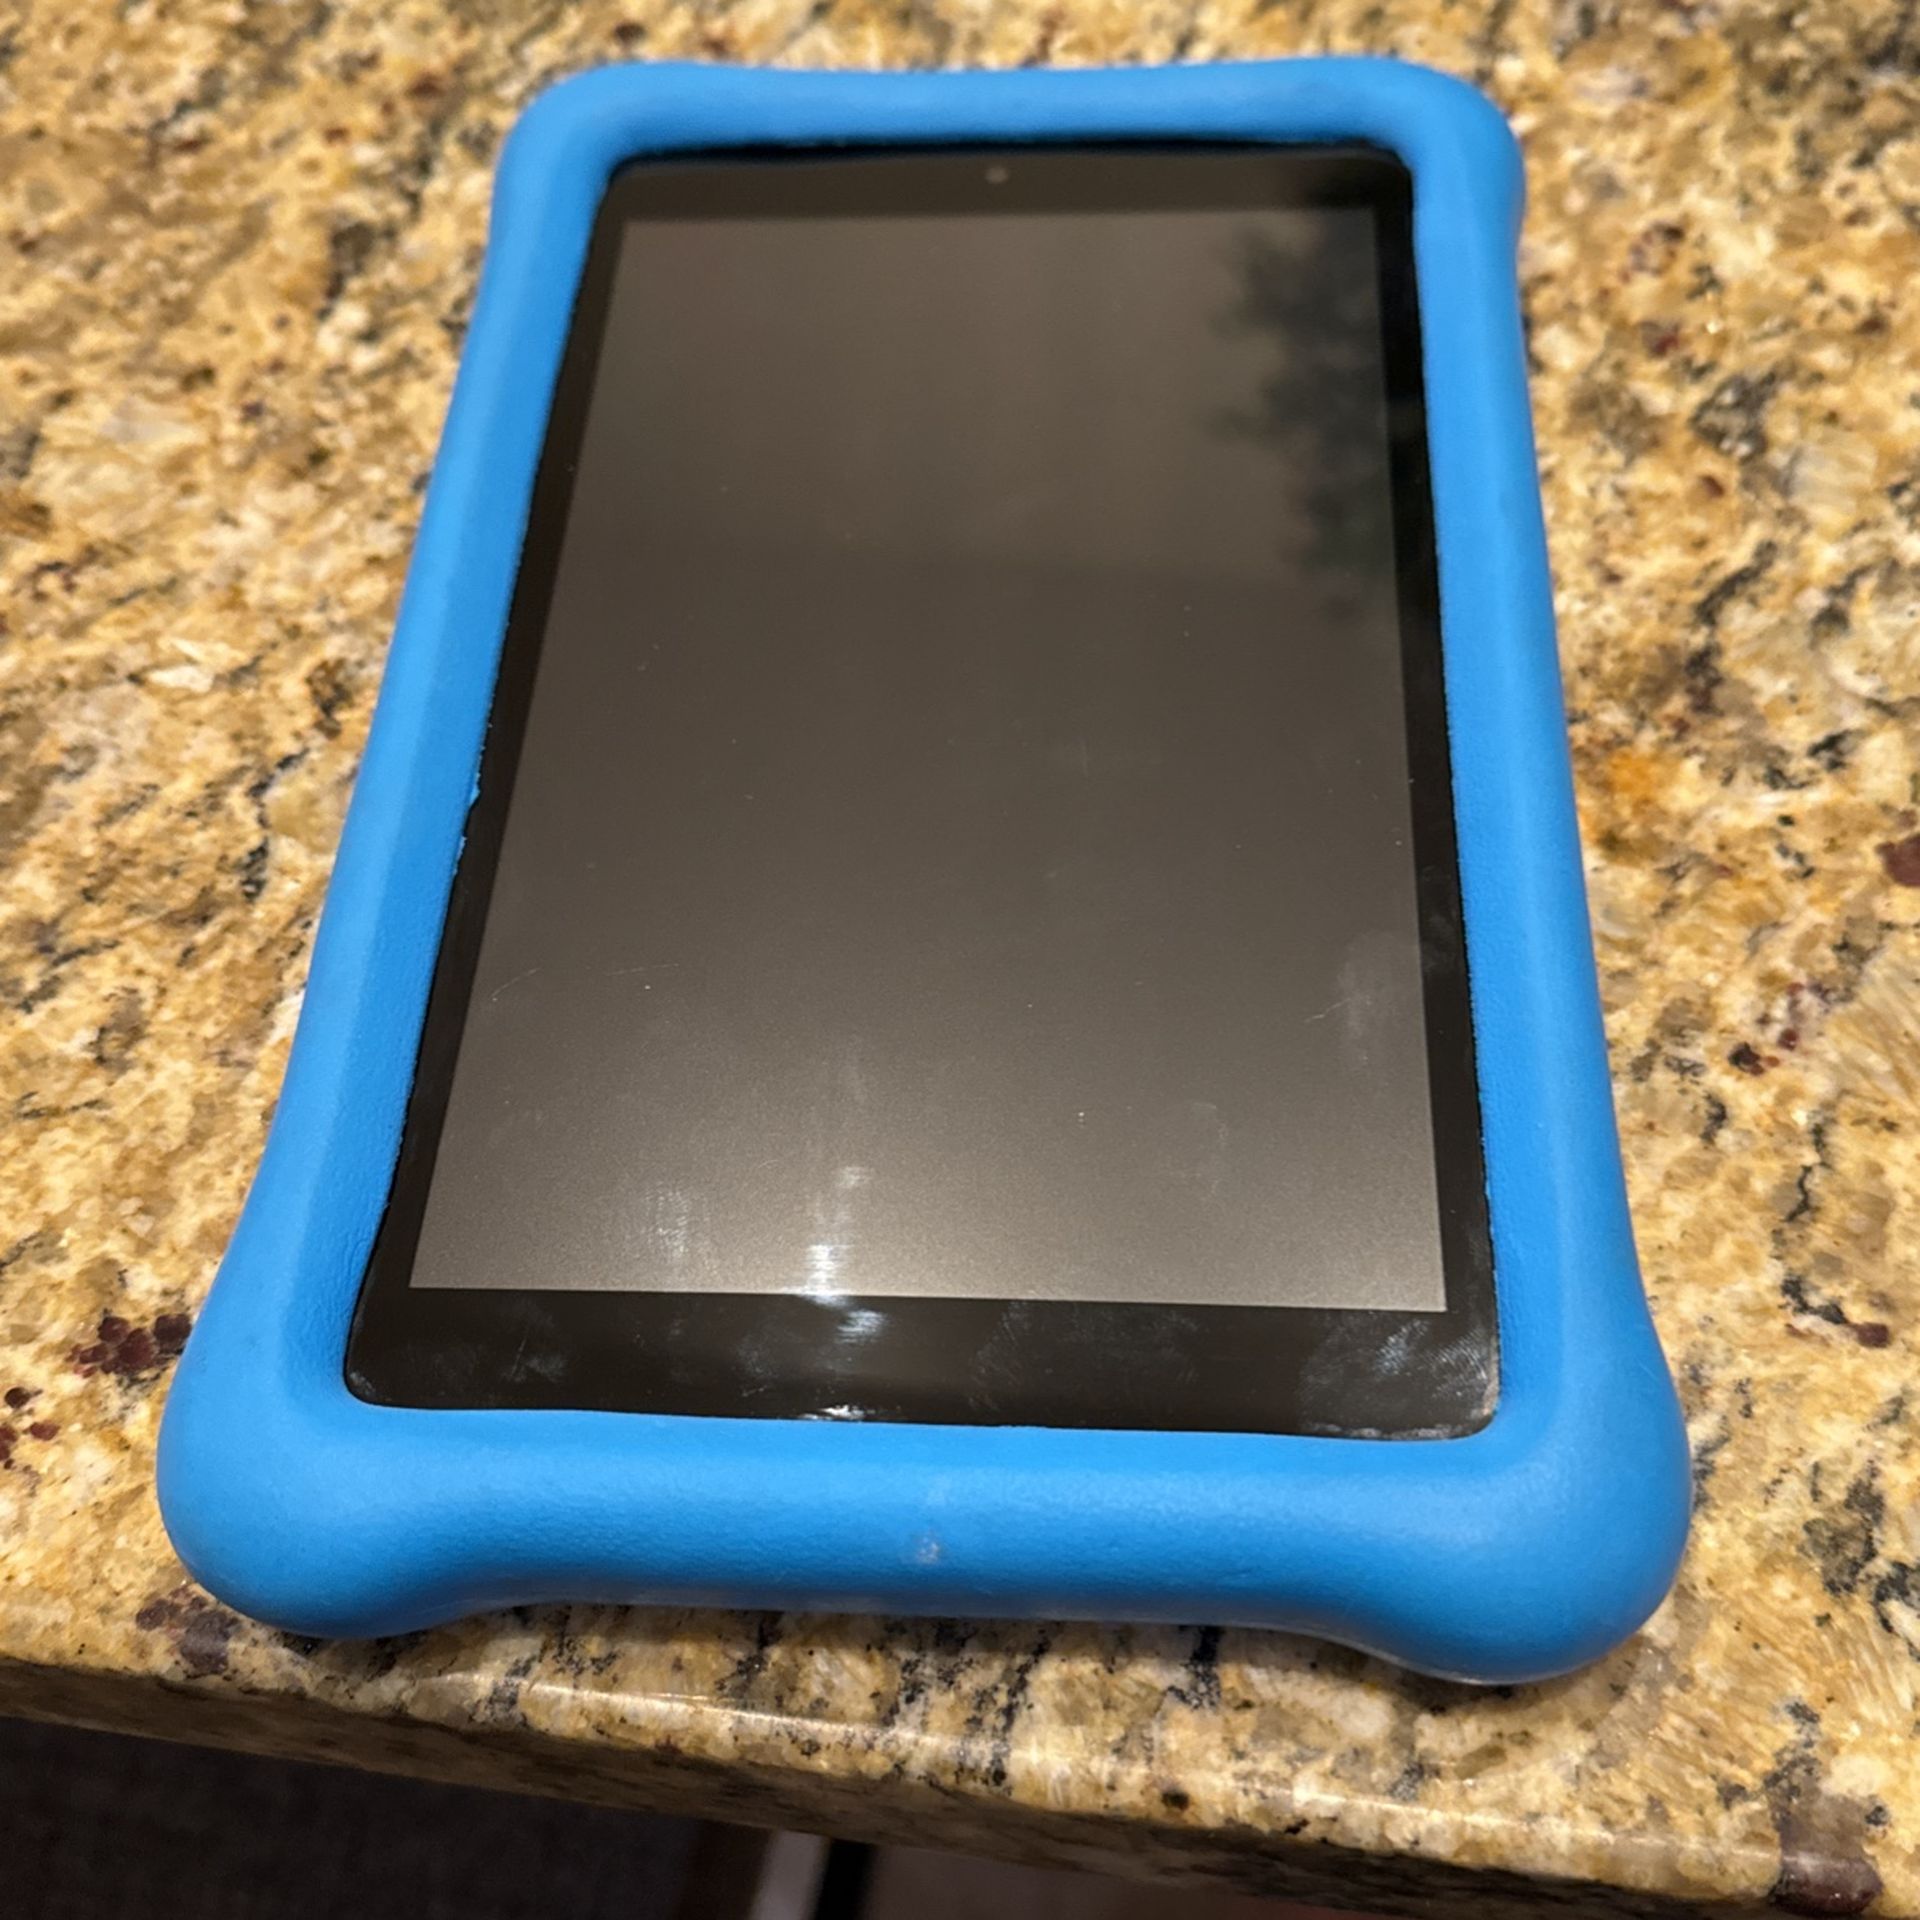 Amazon Fire HD 8 (7th Generation) WiFi 8” Tablet